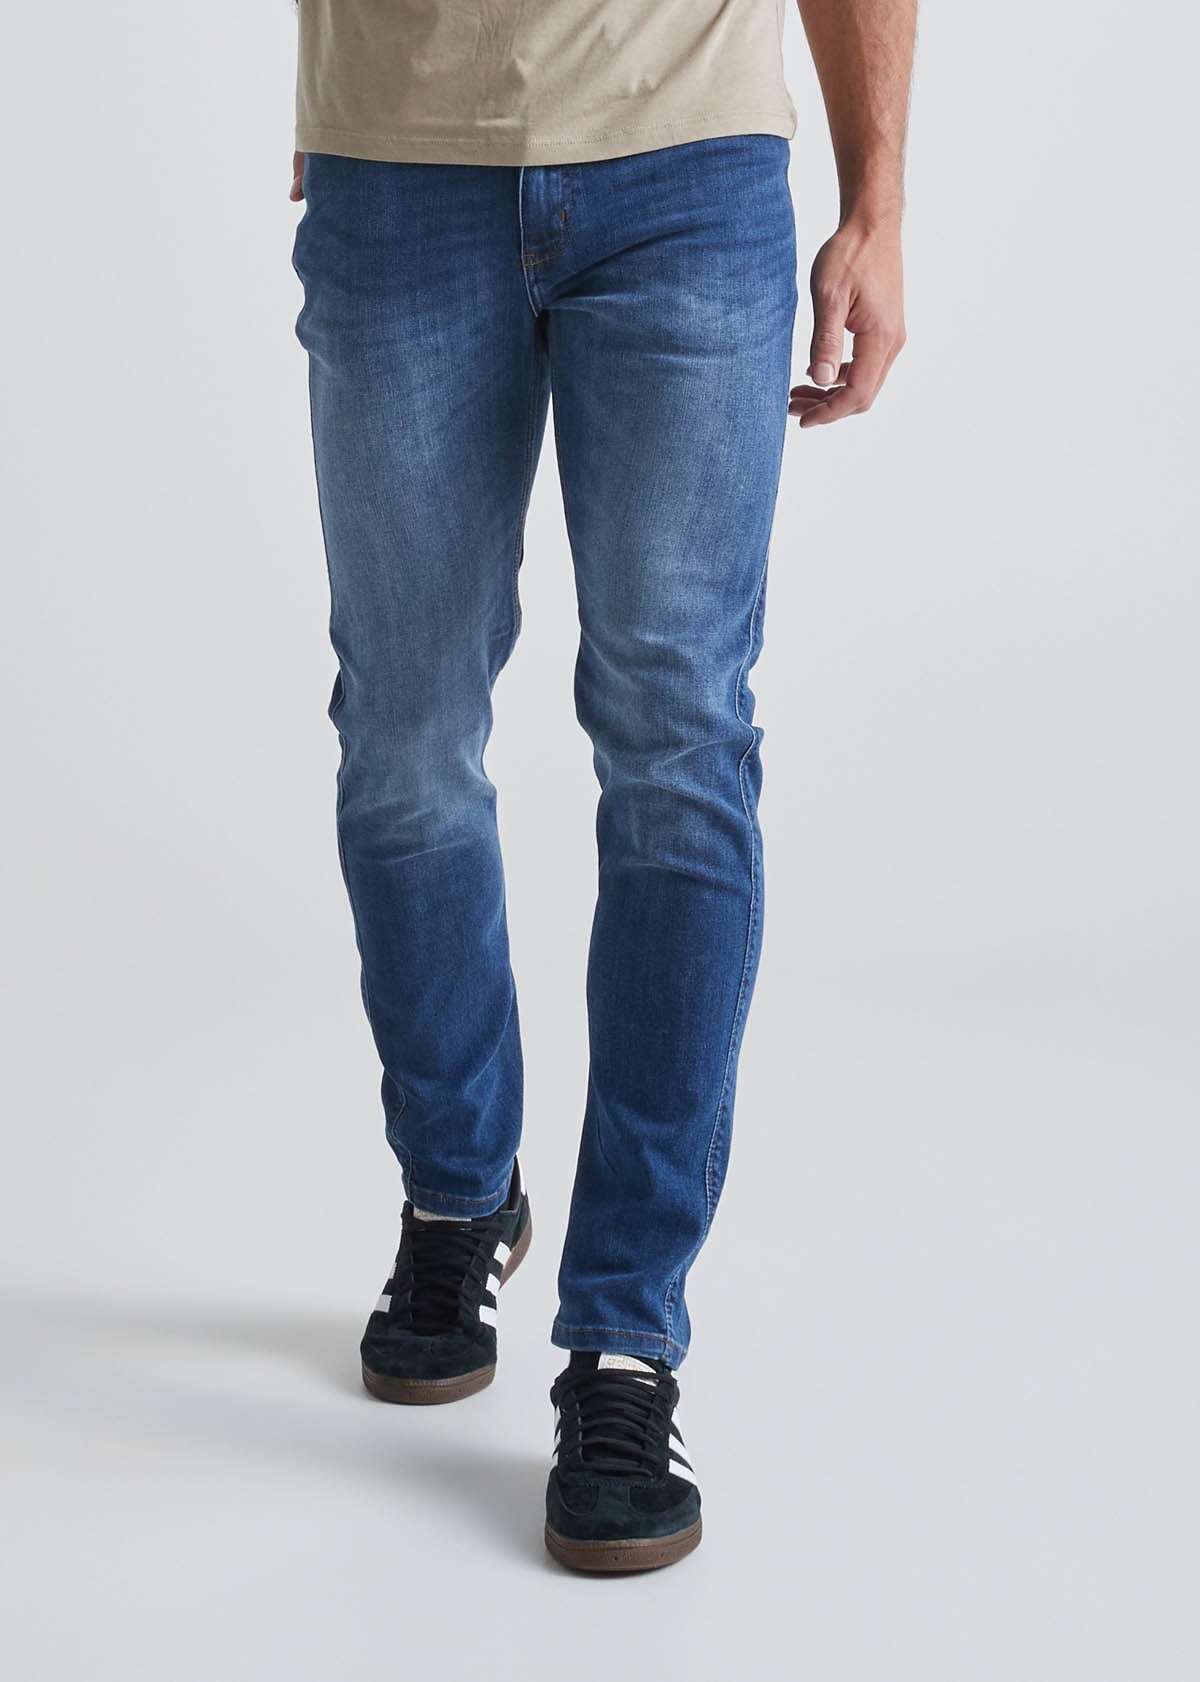 mens medium wash slim fit stretch jeans front